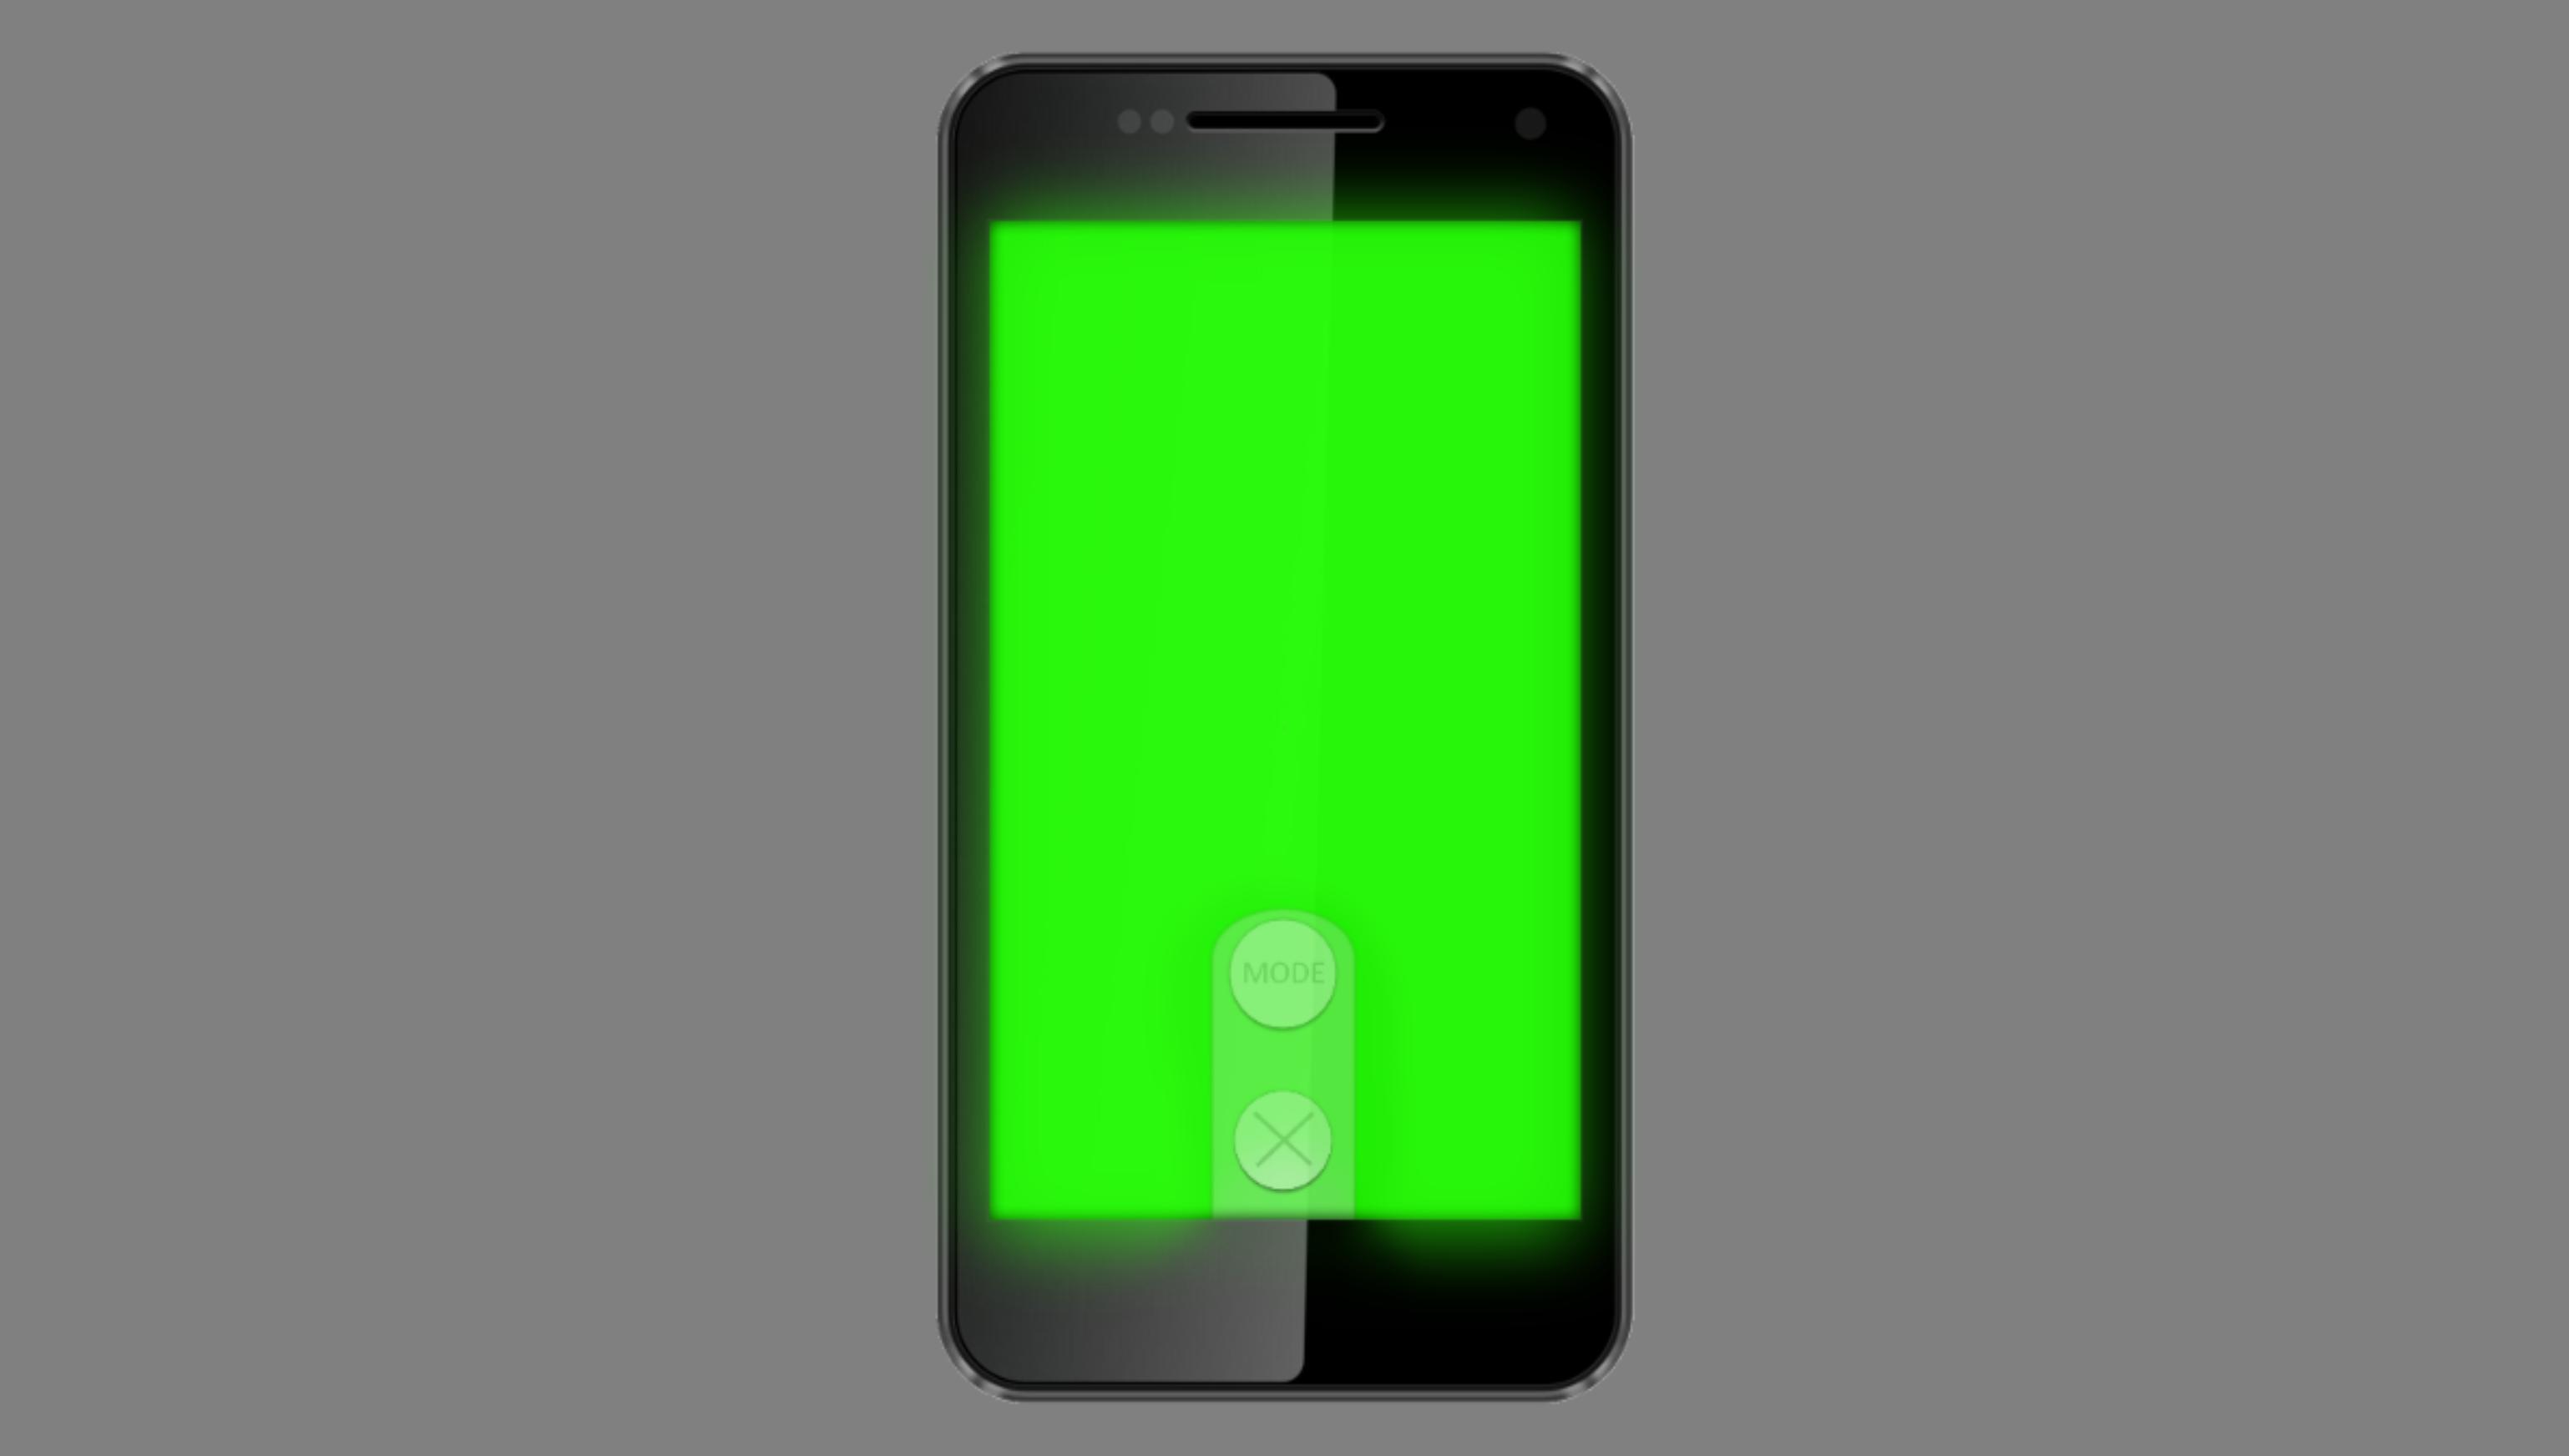 Lampa apk 4pda android. Приложение лампа для андроид. APK как светильник. Strand Lighting Android-0d782c.